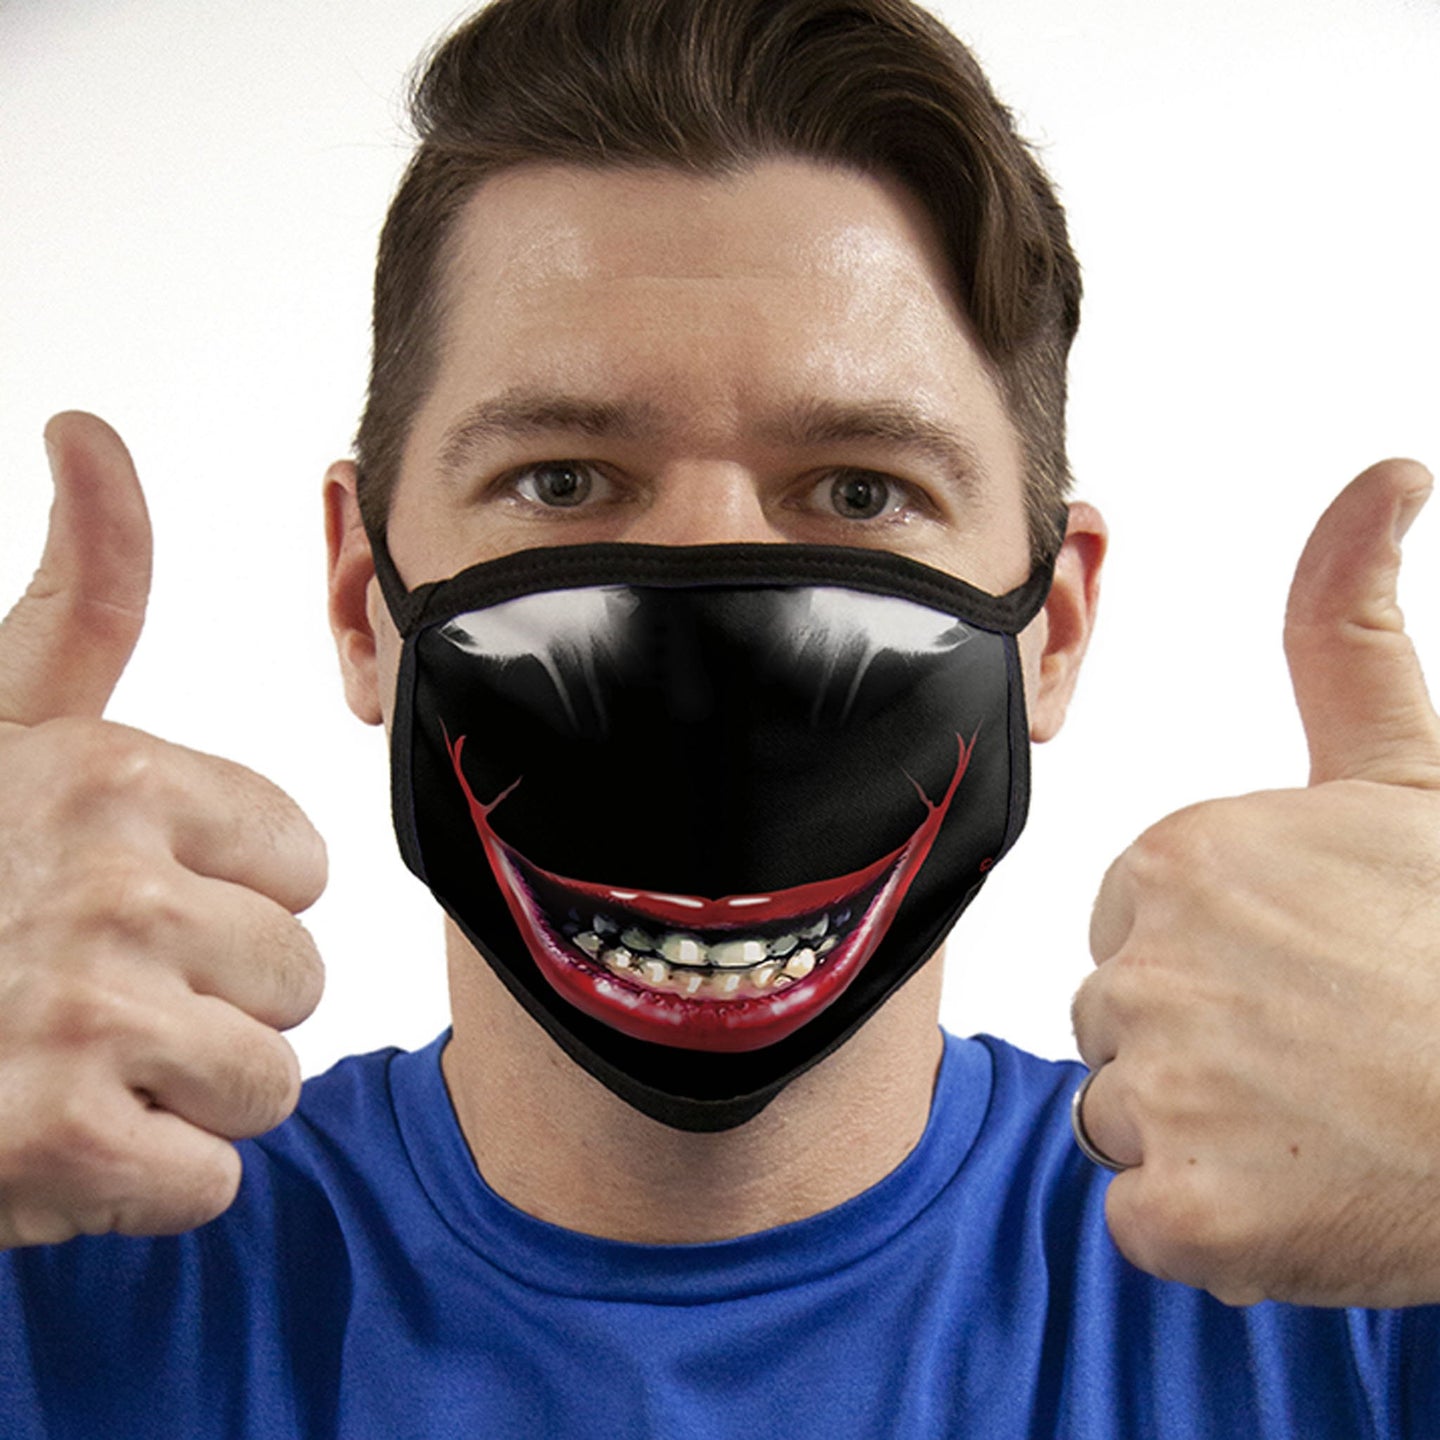 Joker FACE MASK Cover Your Face Masks